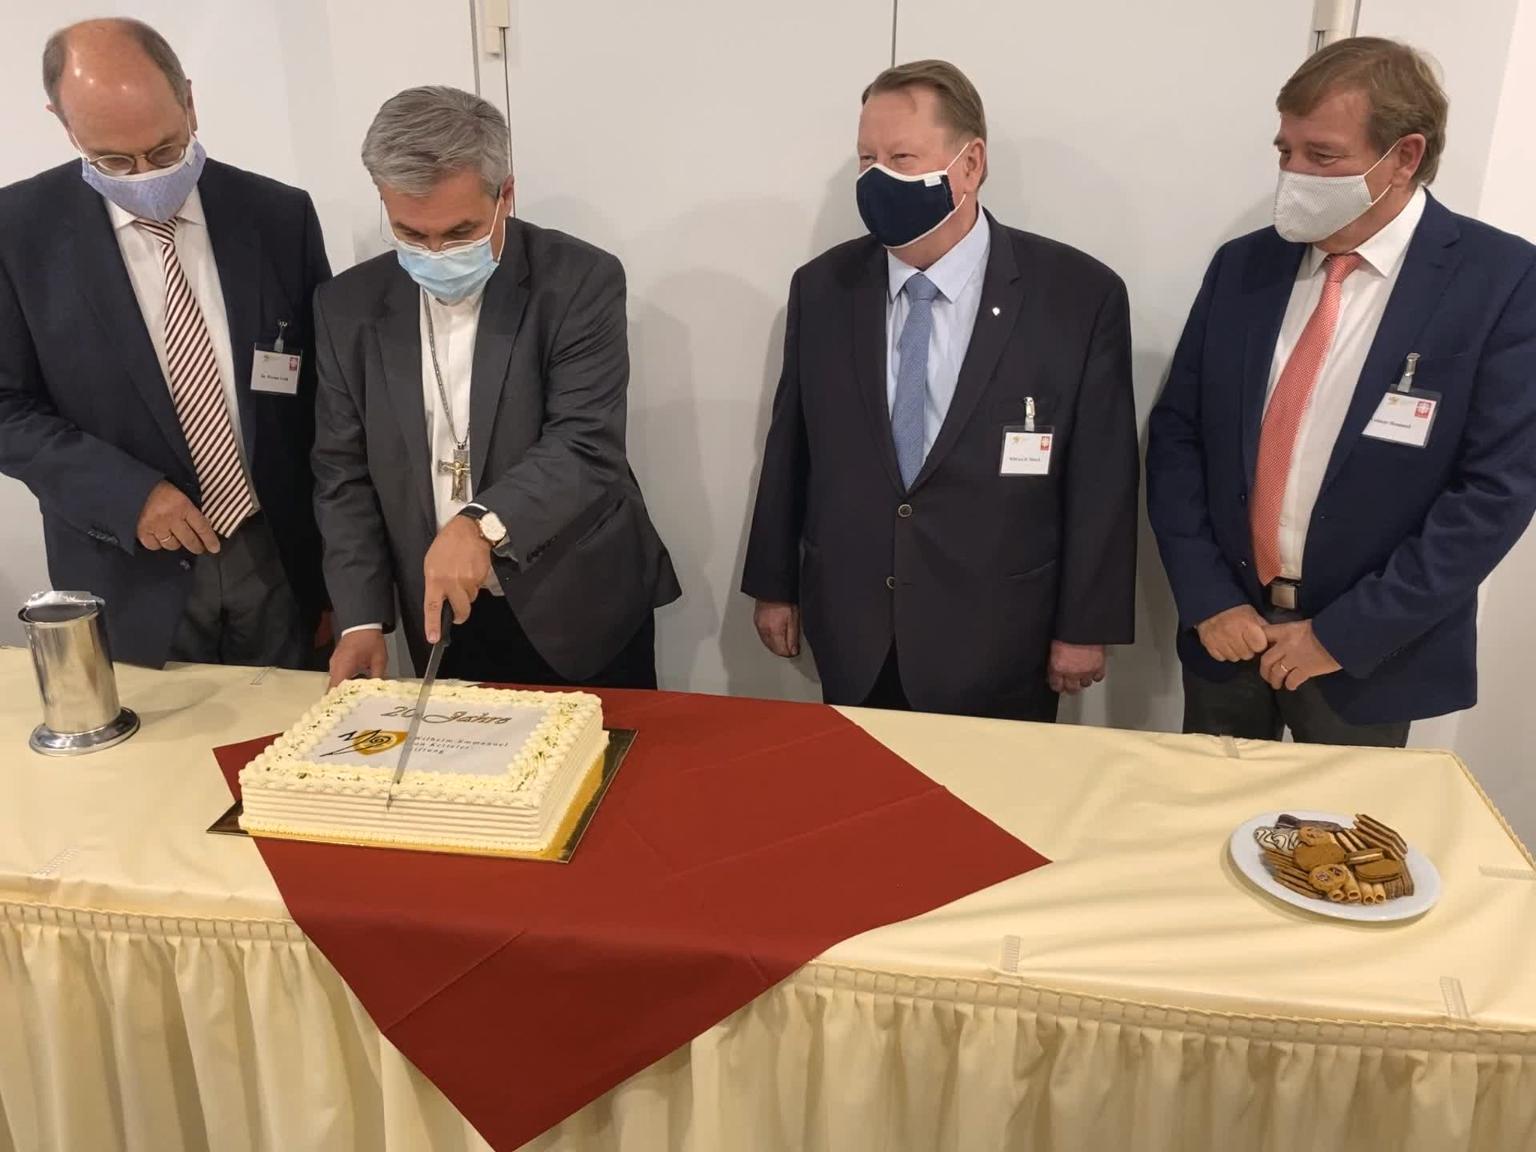 20 Jahre Ketteler Preis (c) Caritasverband Mainz